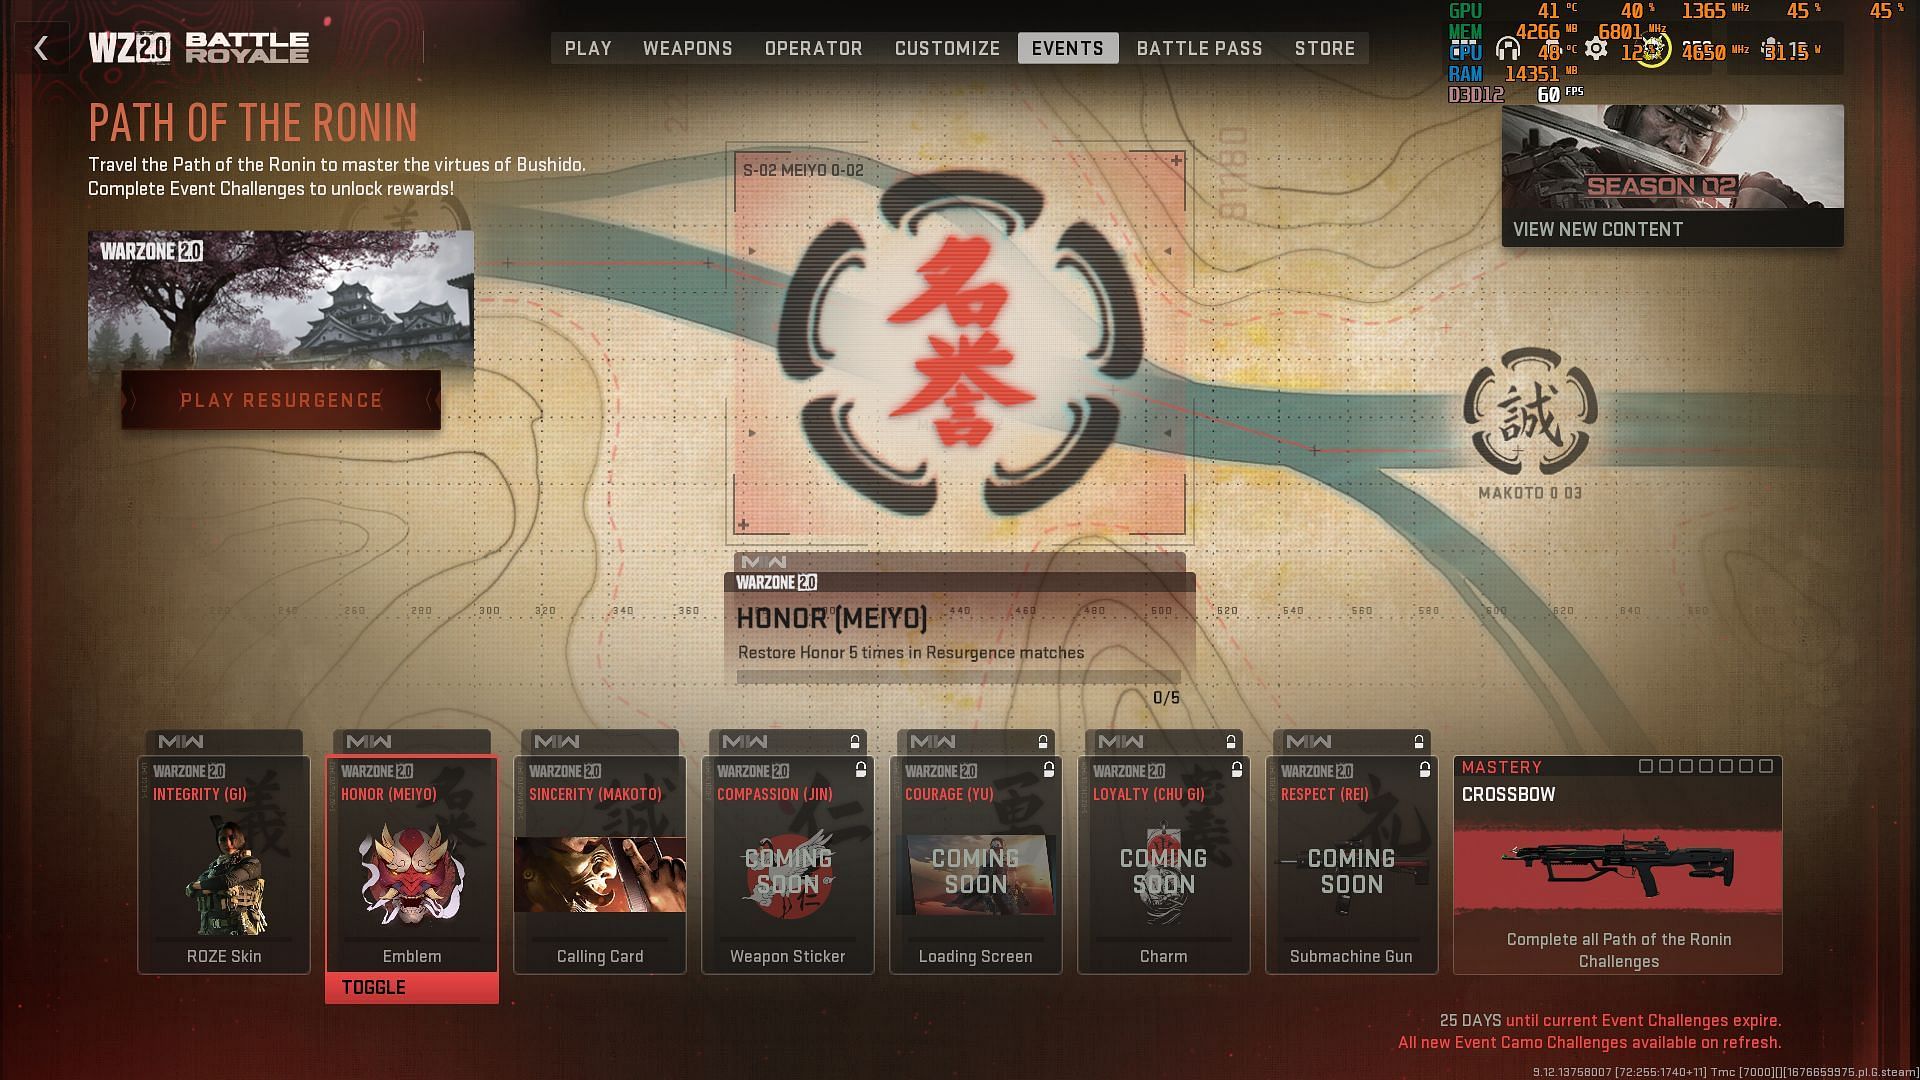 Honor (Meiyo) challenge in Warzone 2 (Image via Activision)